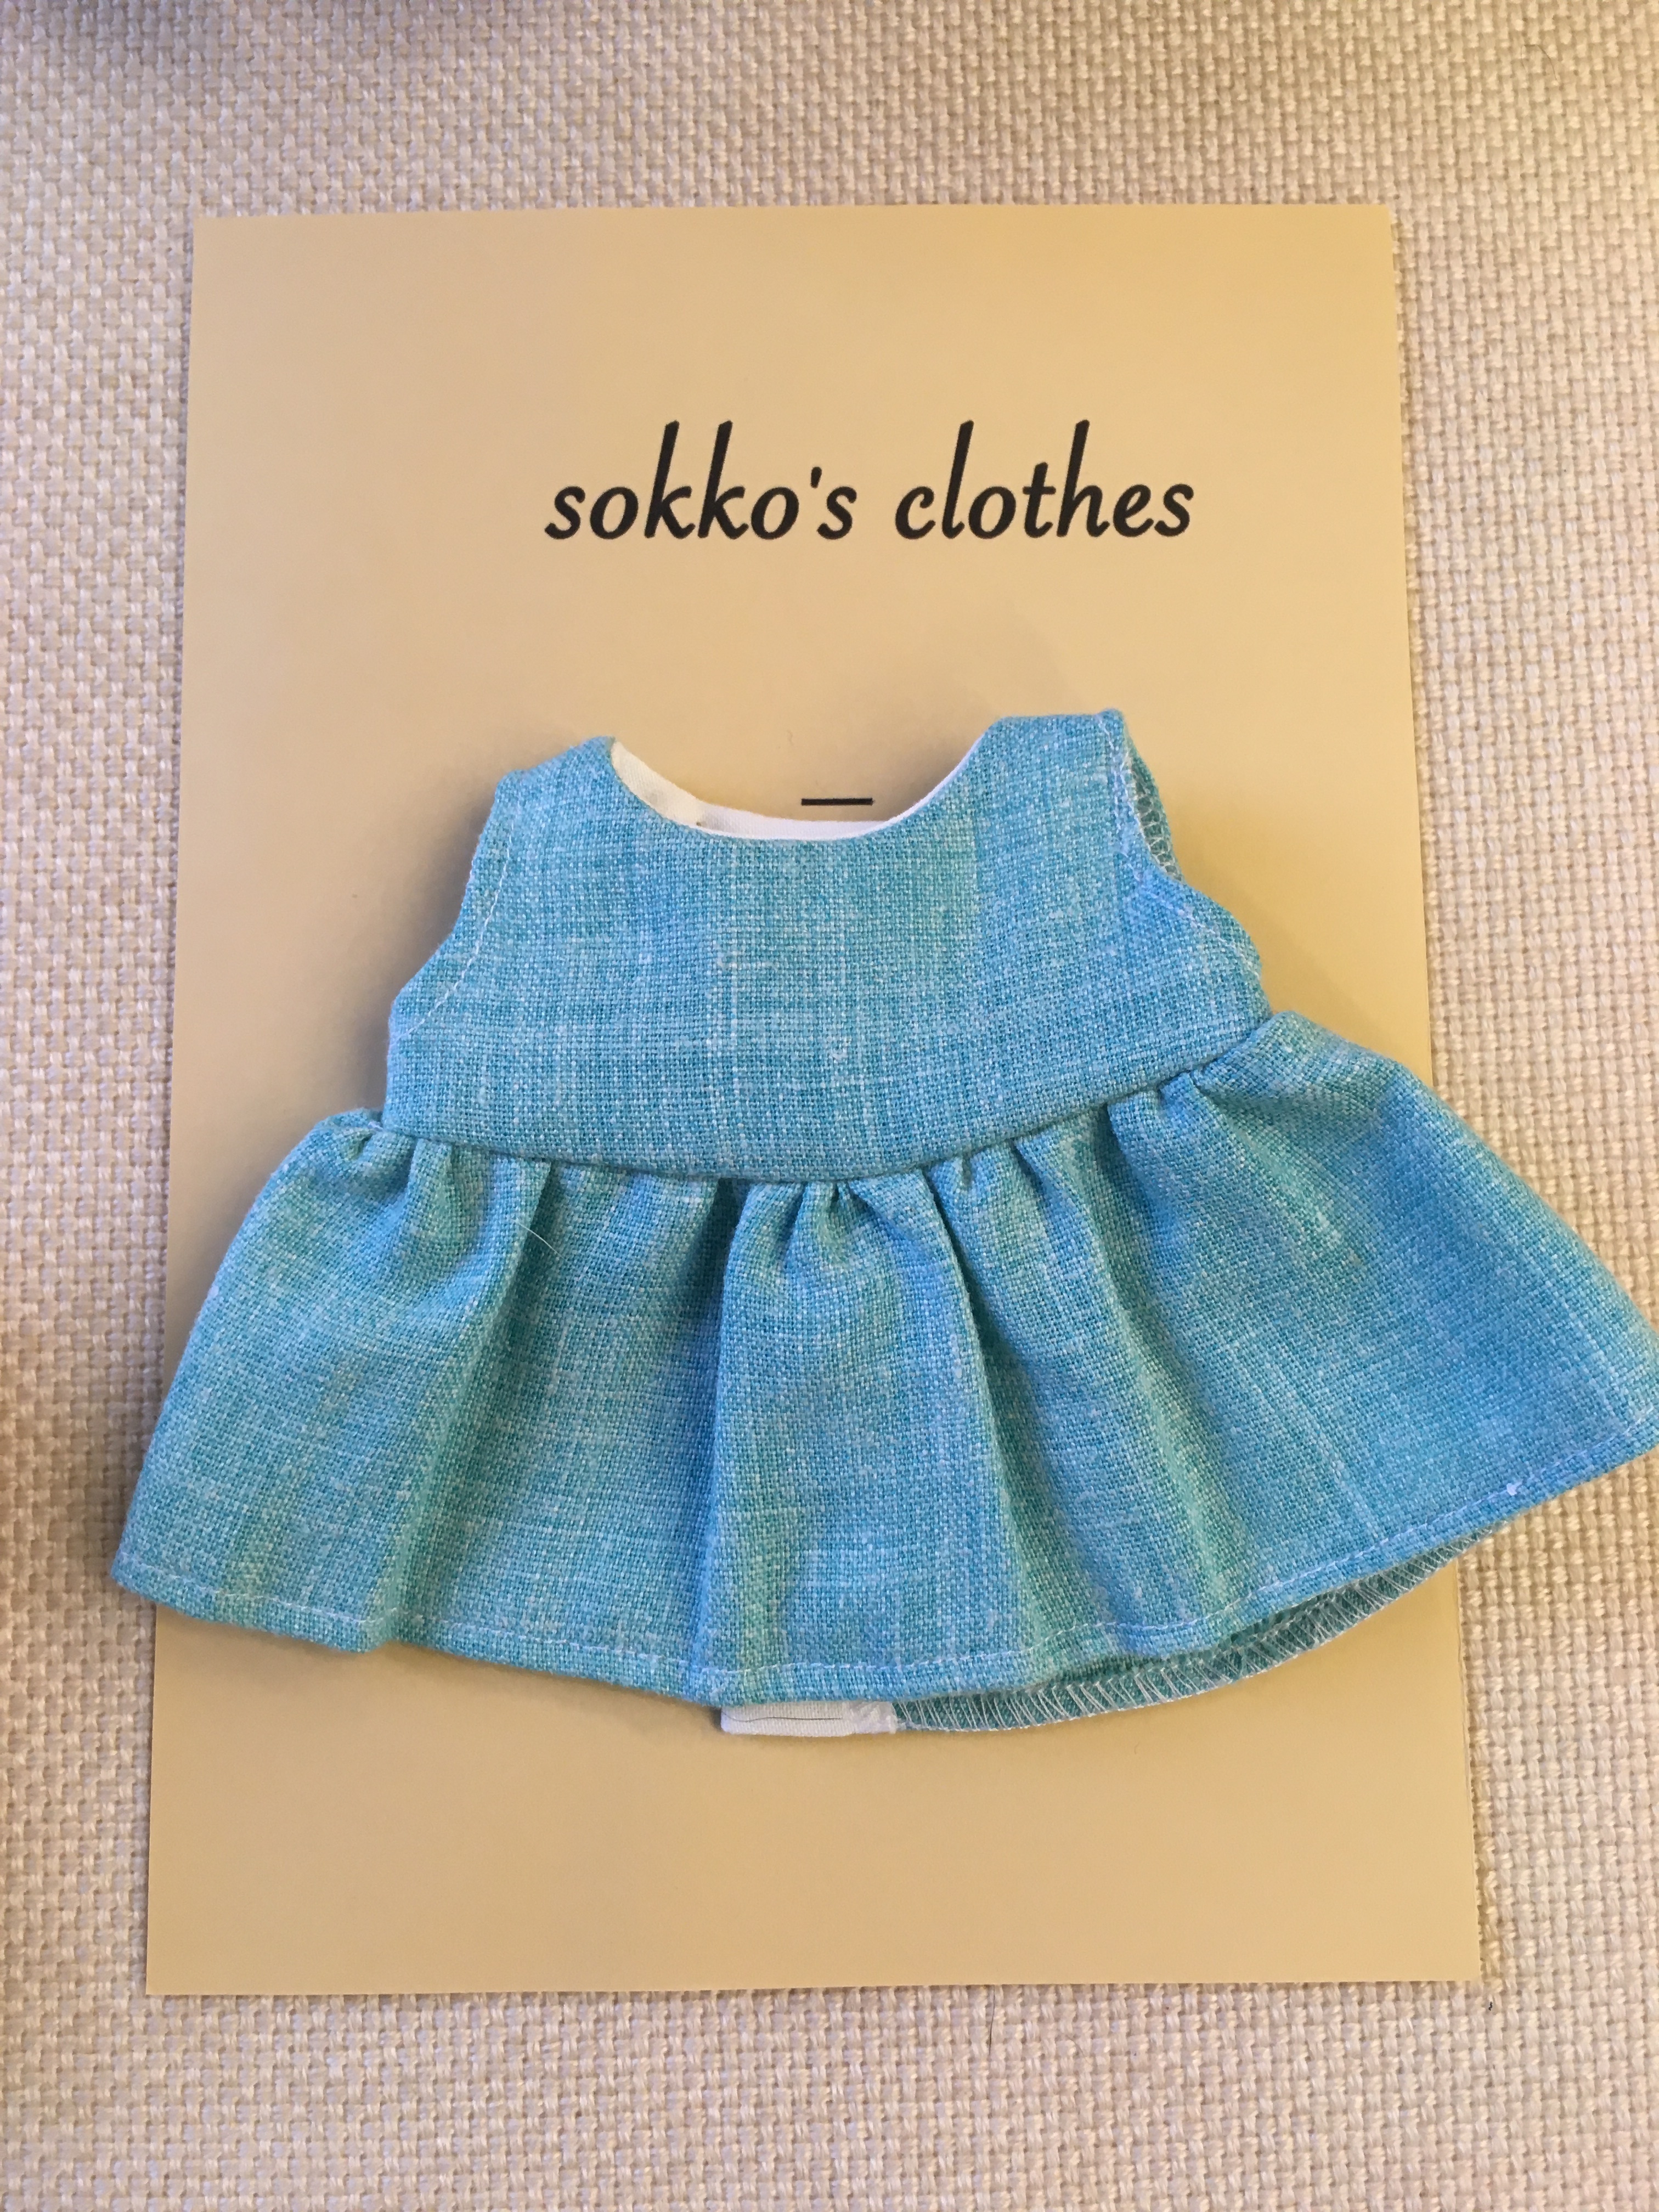 Sokko S Dress 水色のかすれたワンピース Iichi ハンドメイド クラフト作品 手仕事品の通販